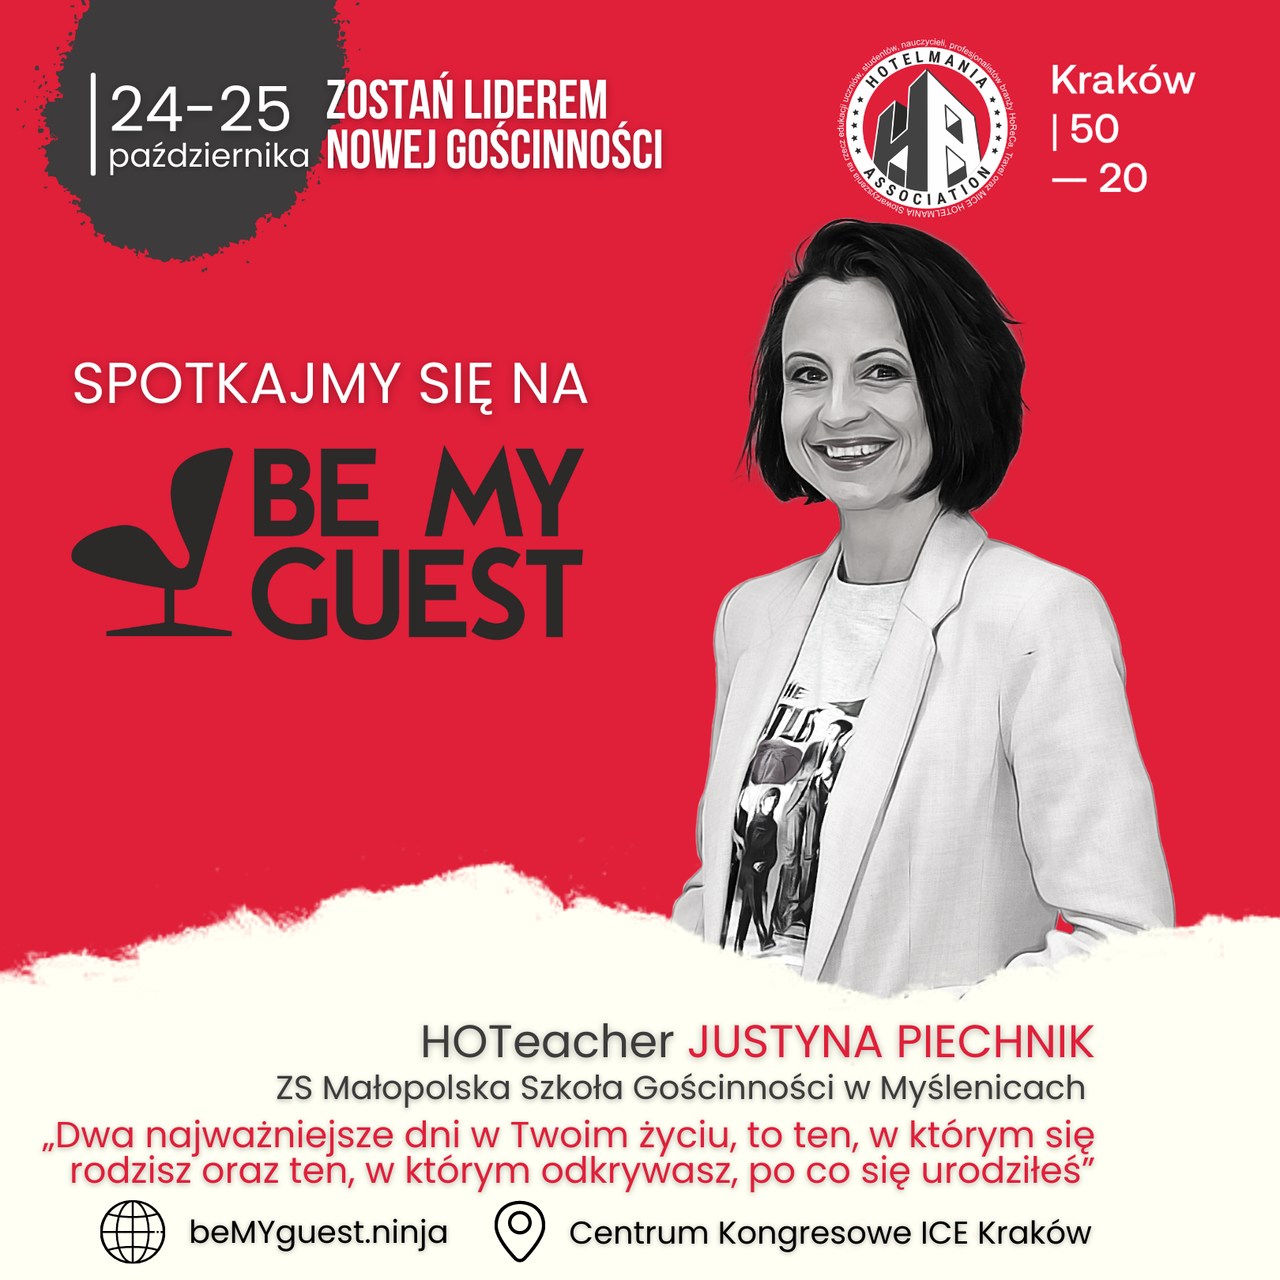 Be my Guest hoteacher Justyna Piechnik